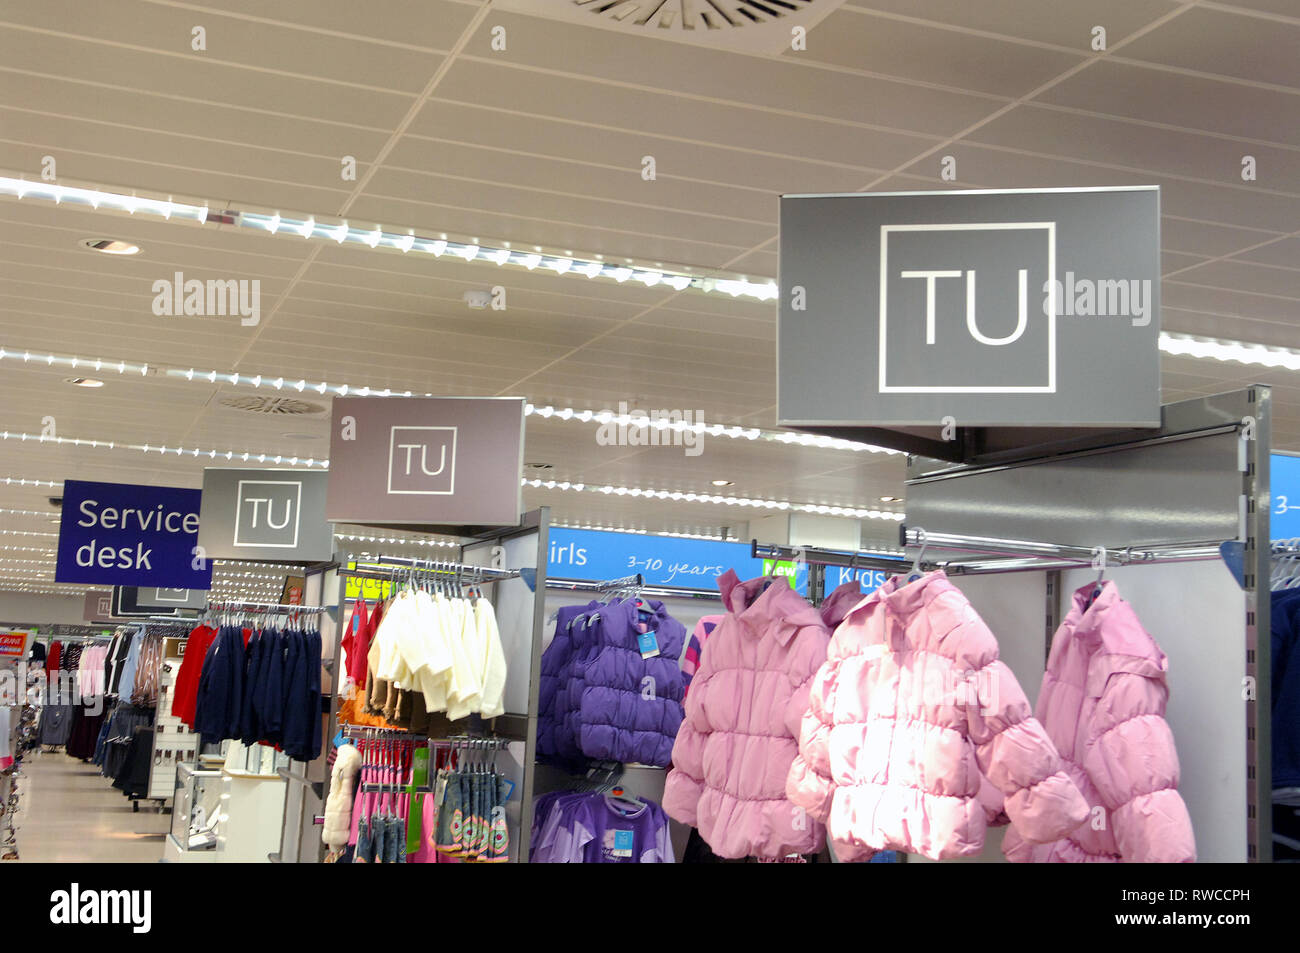 TU clothing range signs in Sainsbury's Stock Photo